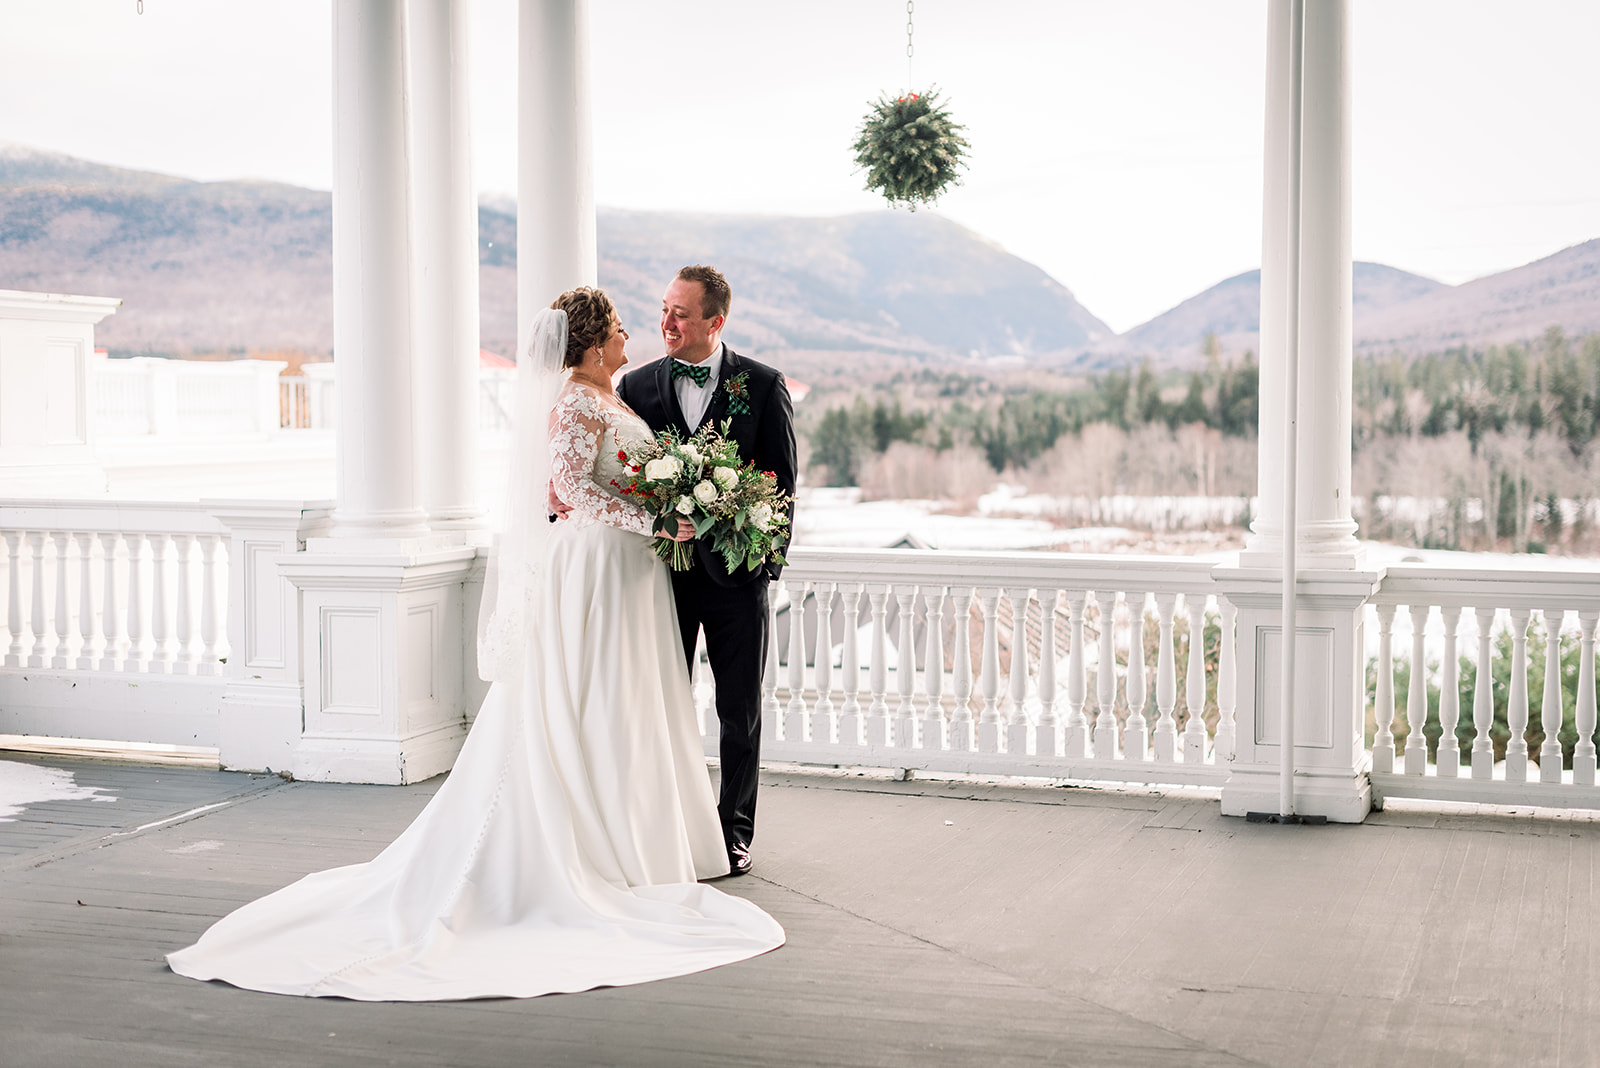 A winter wedding at the Omni Mount Washington Resort in New Hampshire. 
Molly Breton & Co.